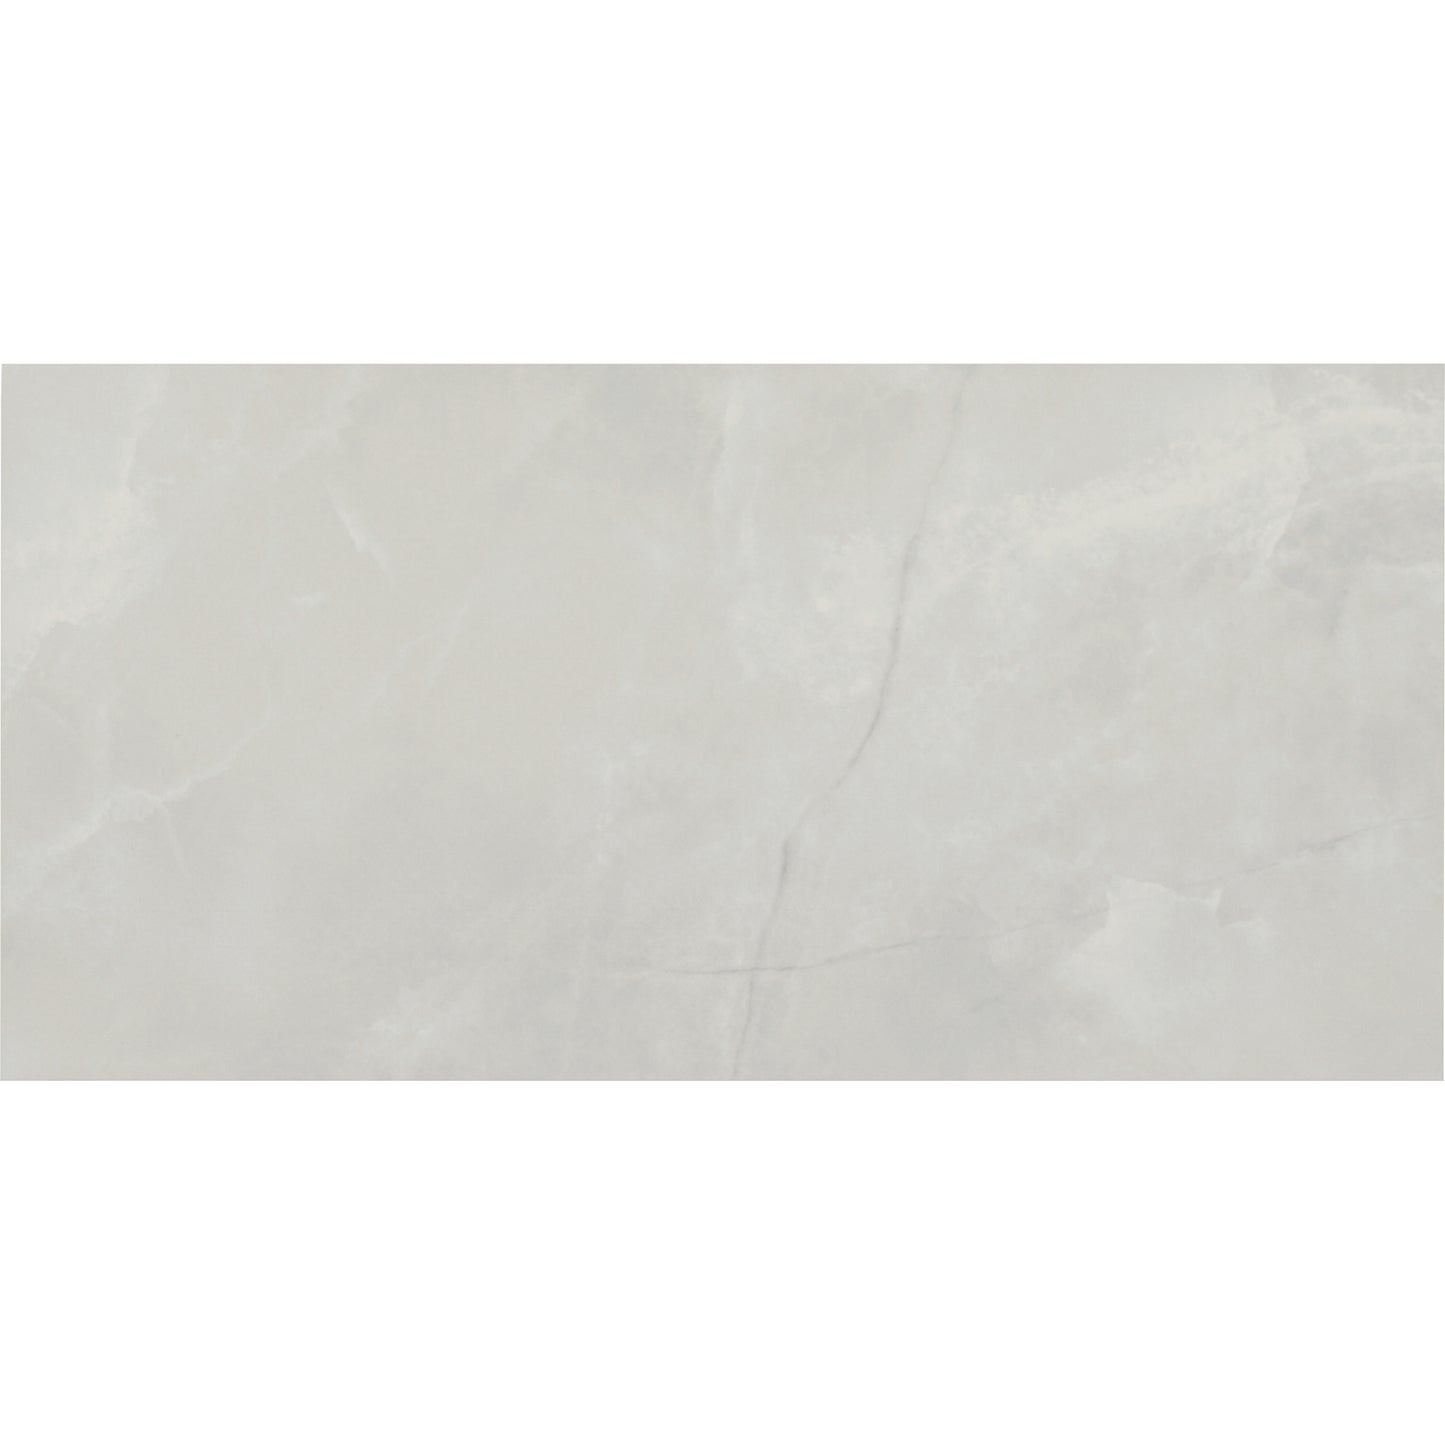 Onyx Grey Rectified Ceramic Marble Gloss Wall Tiles 30cmx60cm